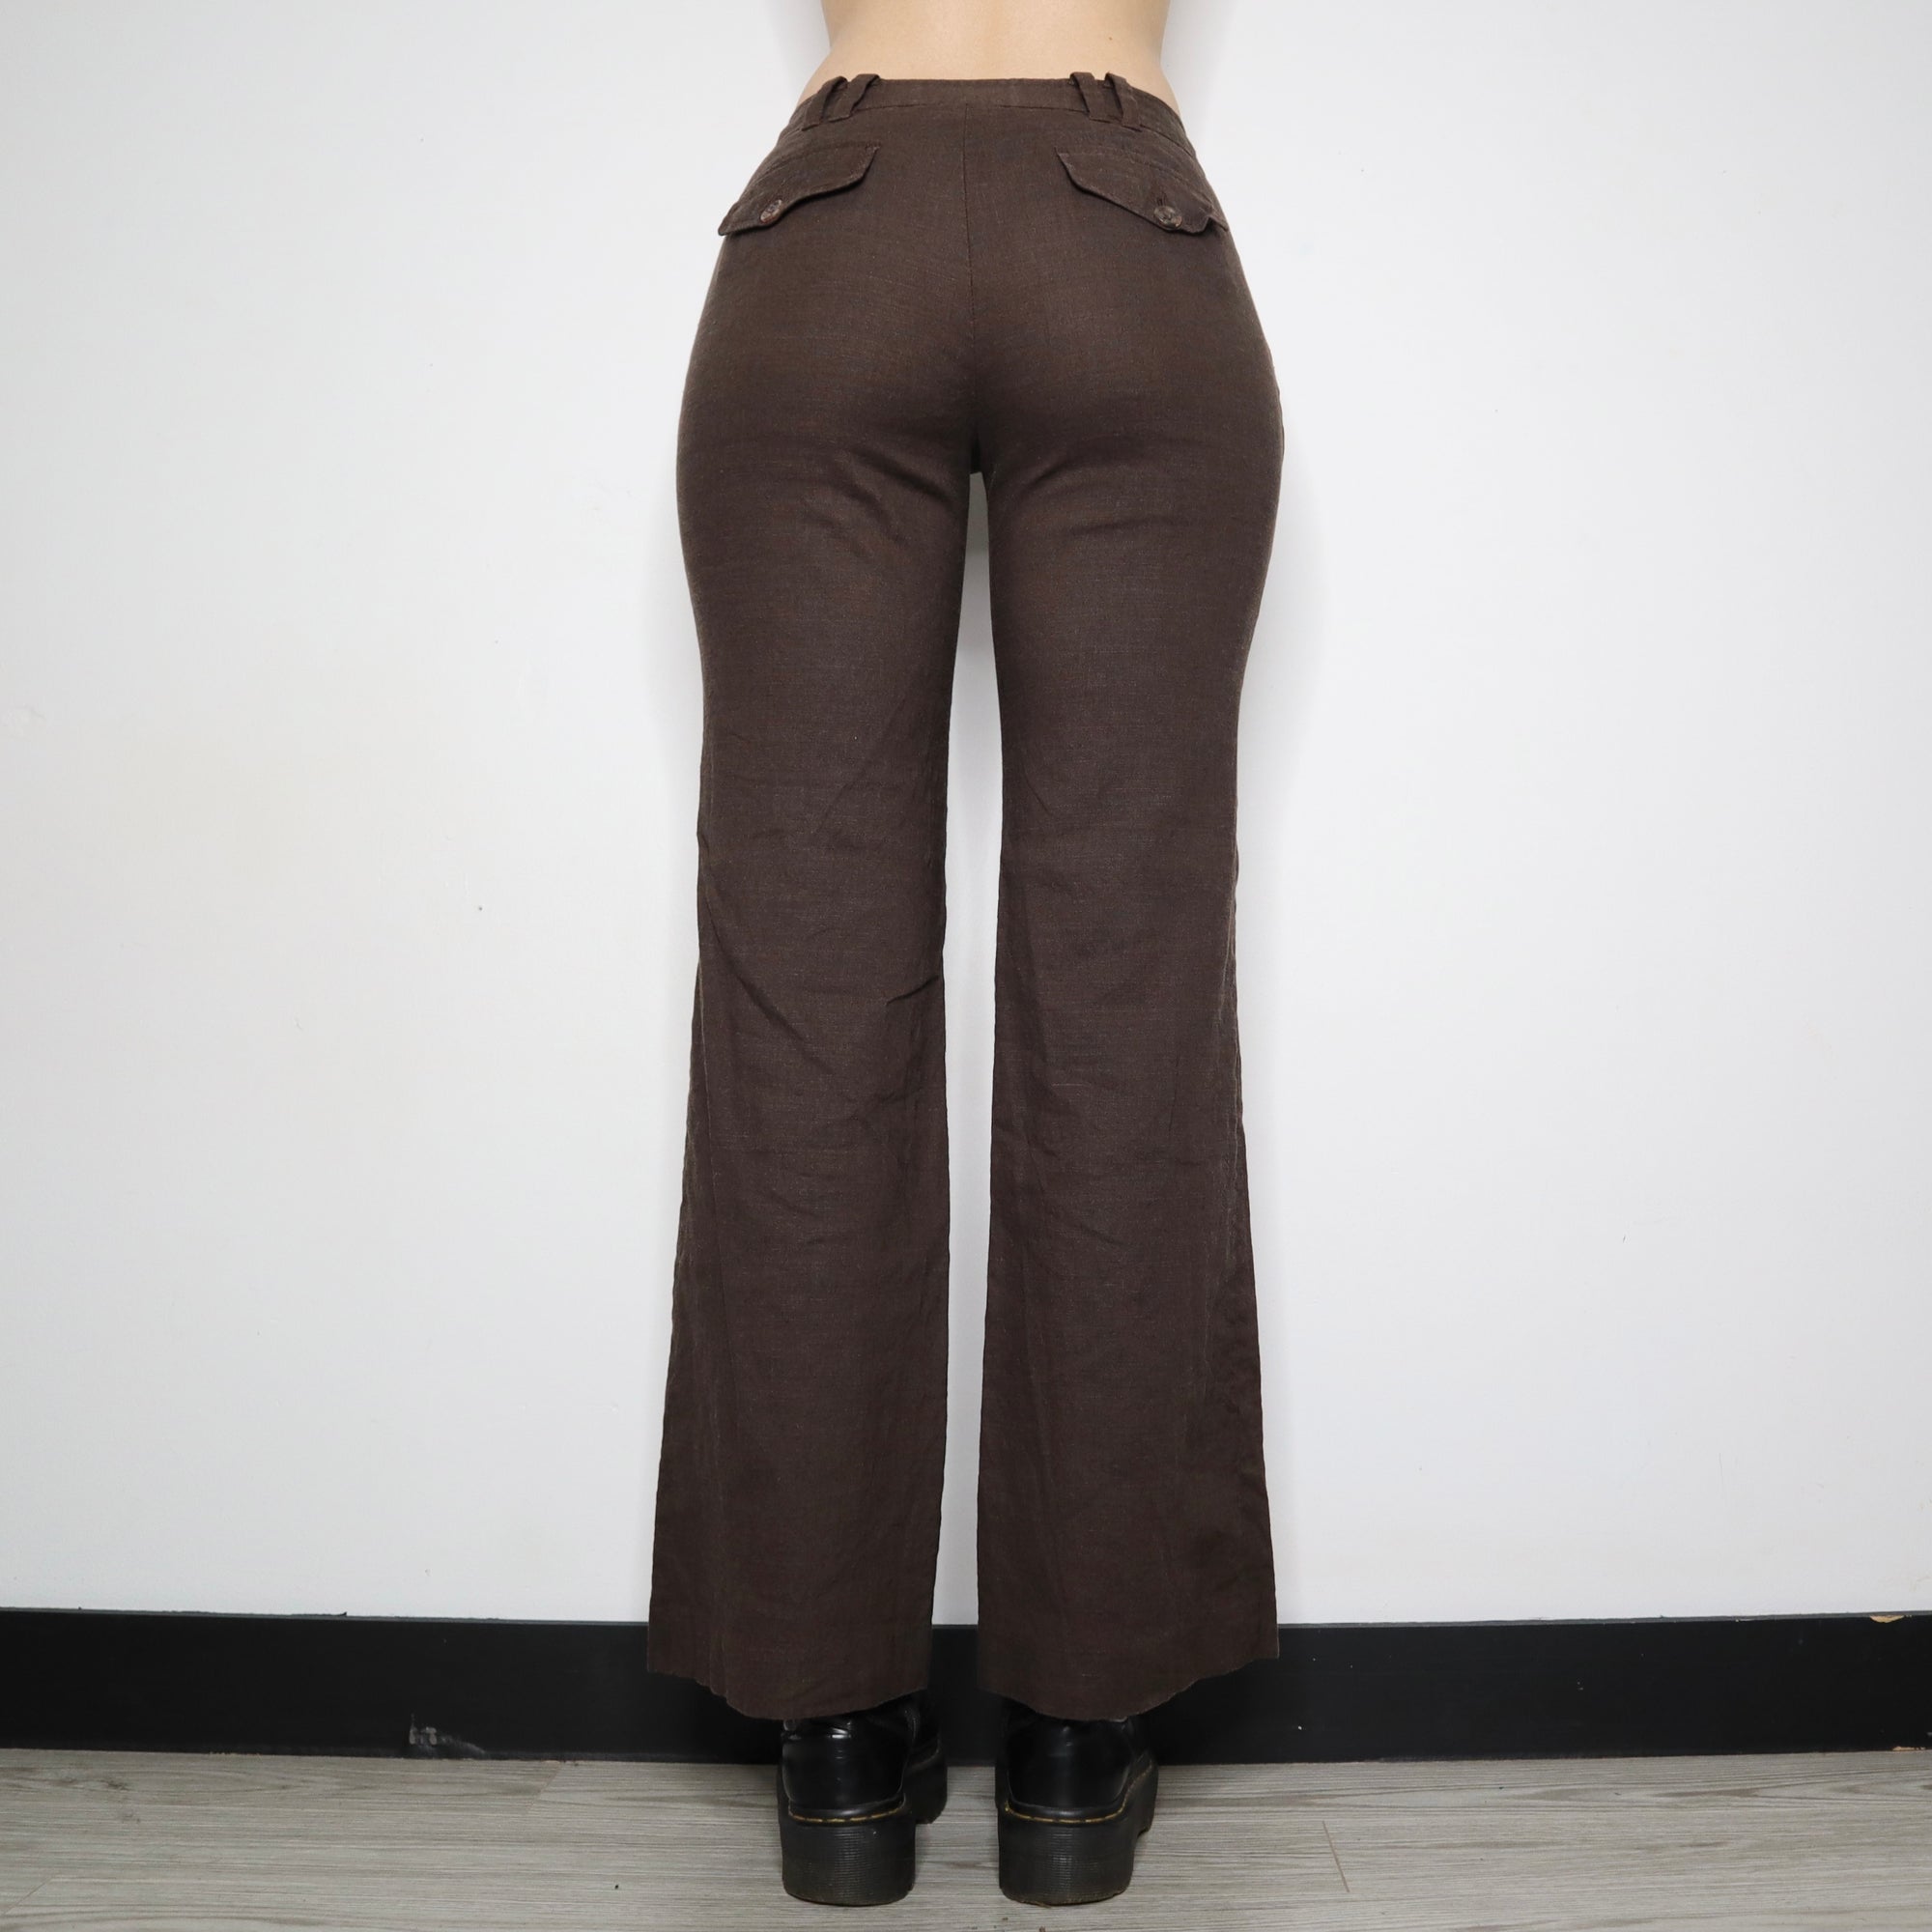 Vintage Early 2000s Mocha Brown Linen Pants